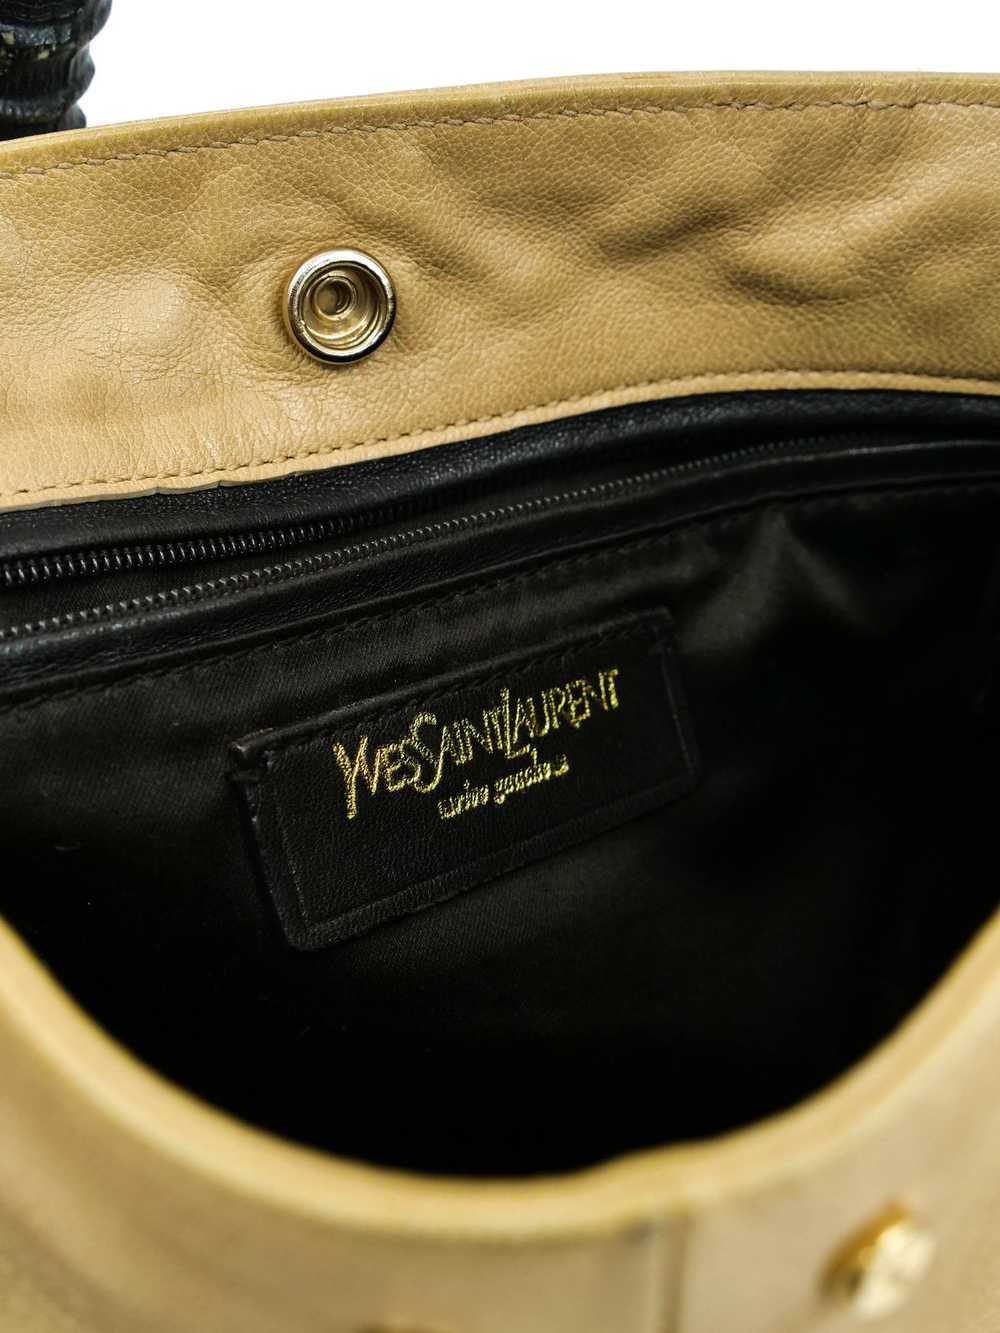 Yves Saint Laurent Beige Leather Mombasa Bag - image 2